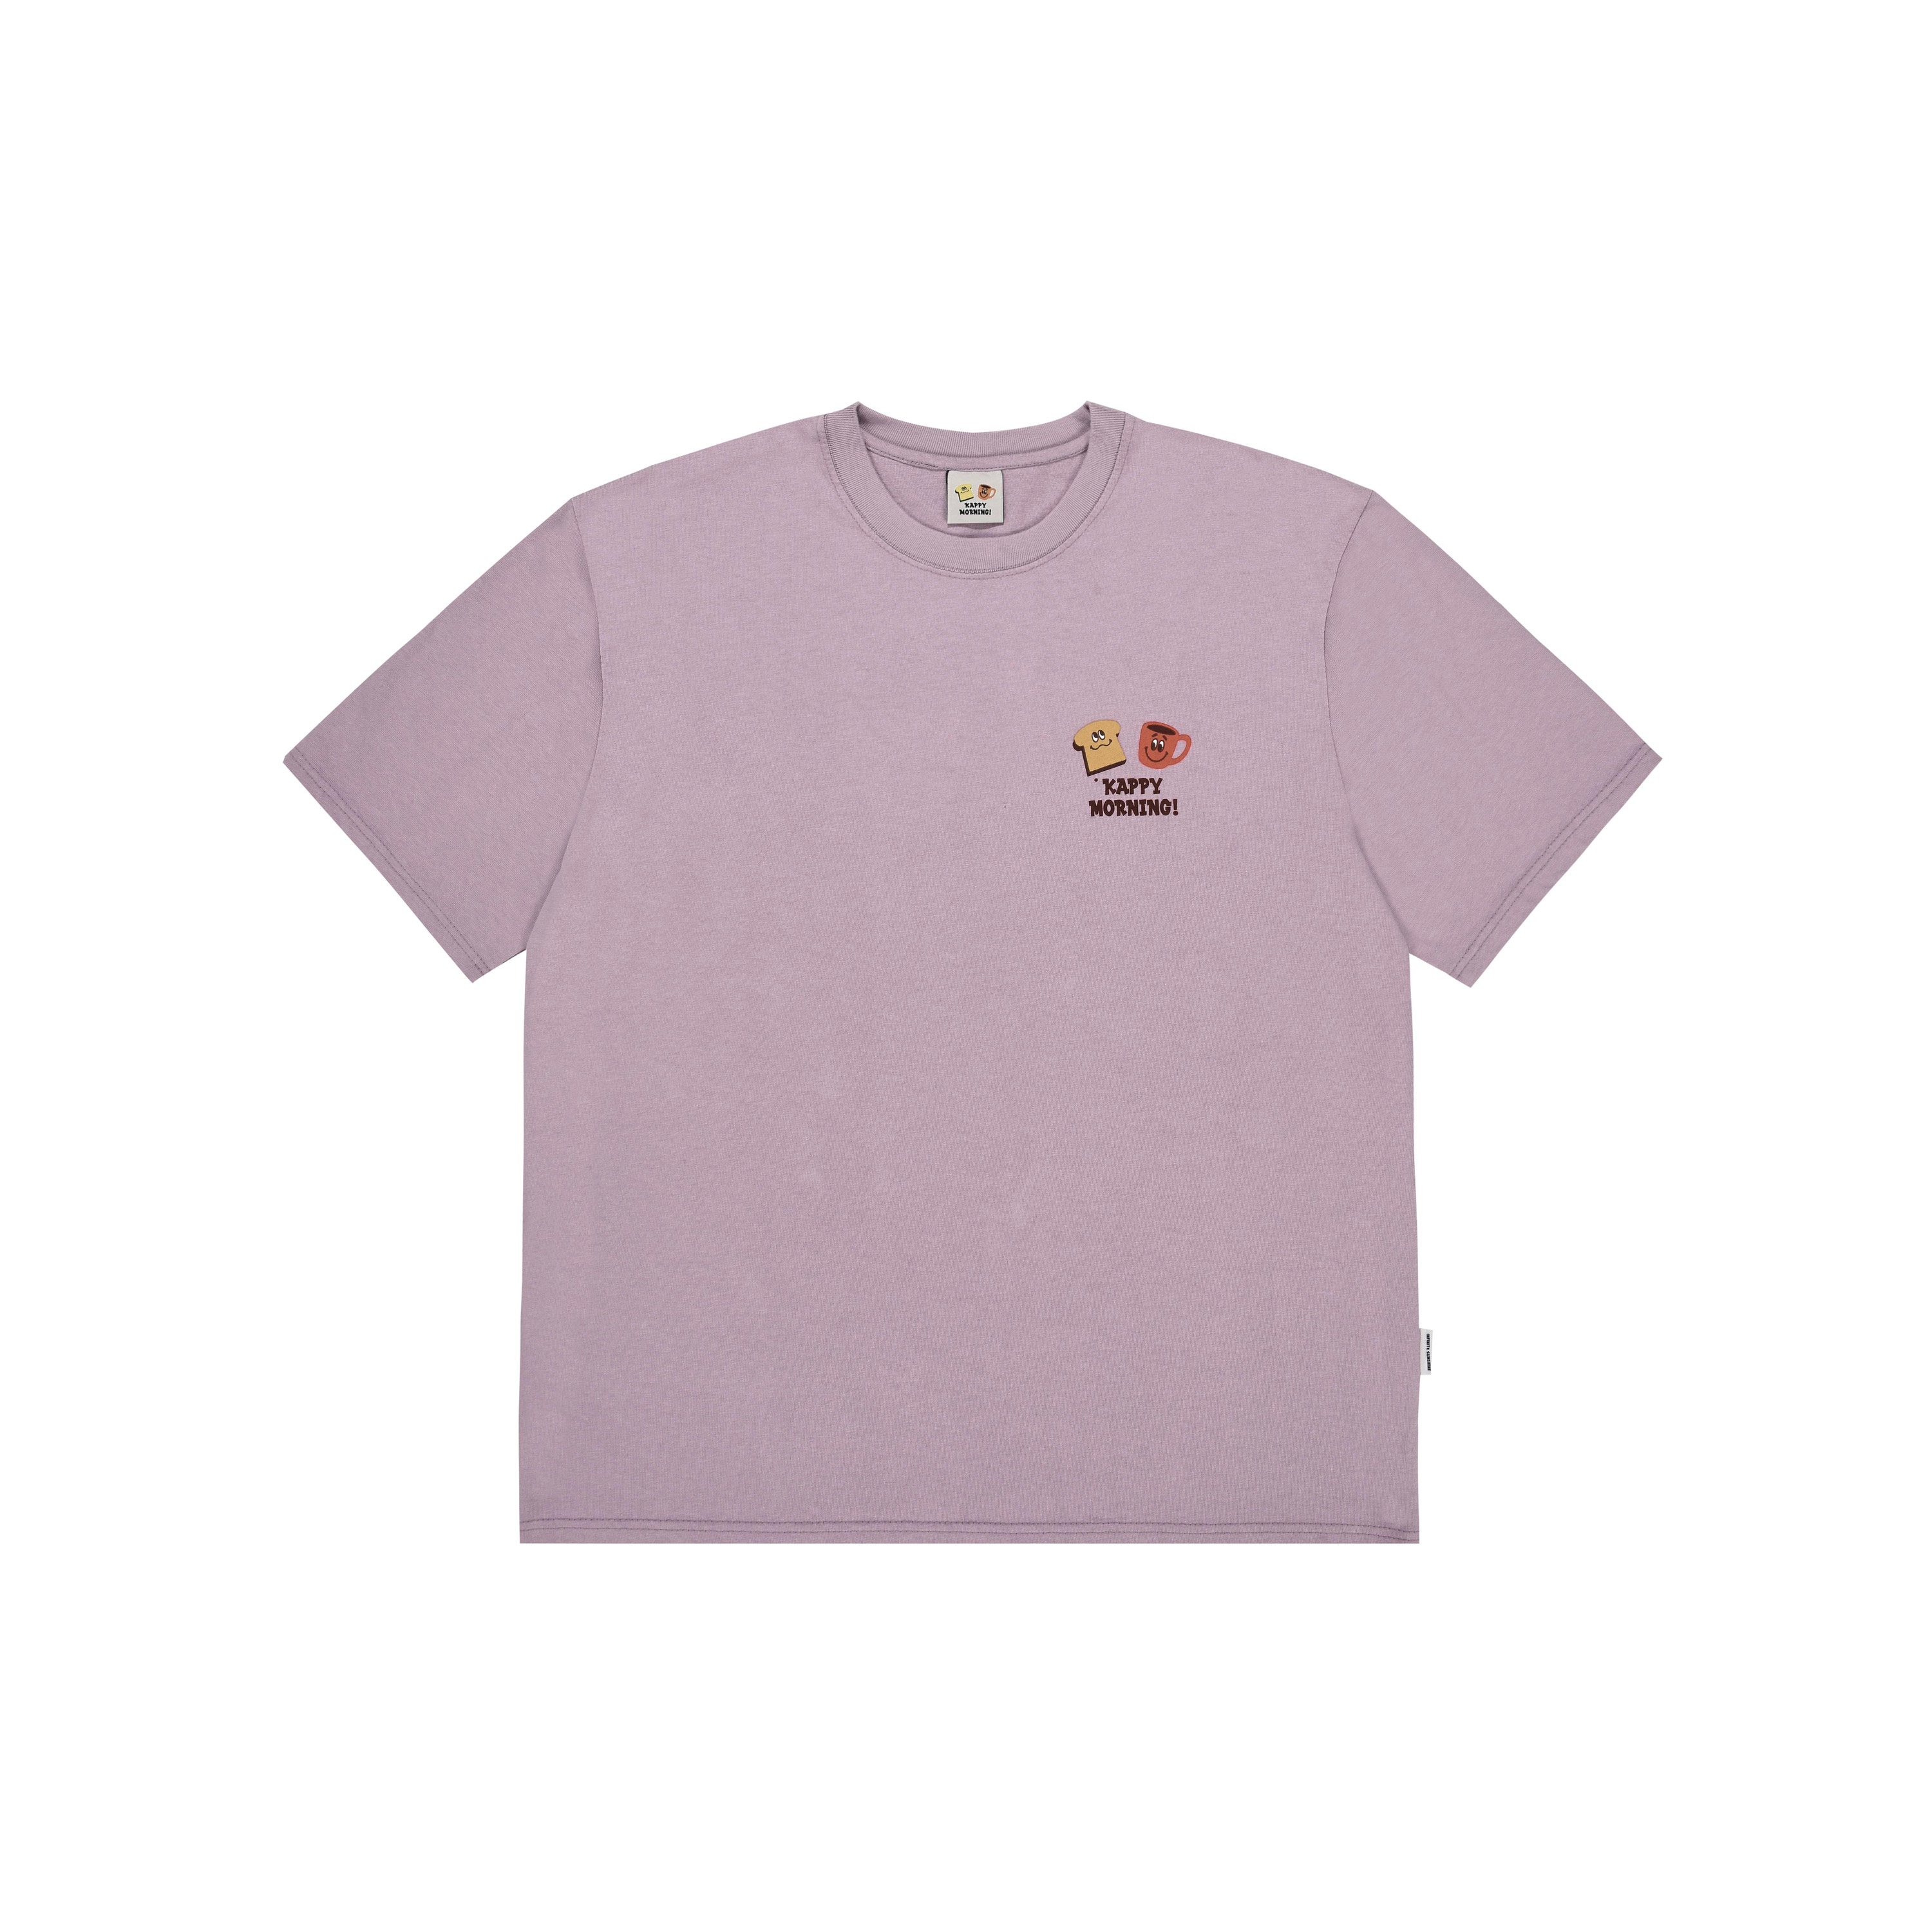 Kappy morning half t-shirt </br>(TORU FUKUDA EDITION) lilac